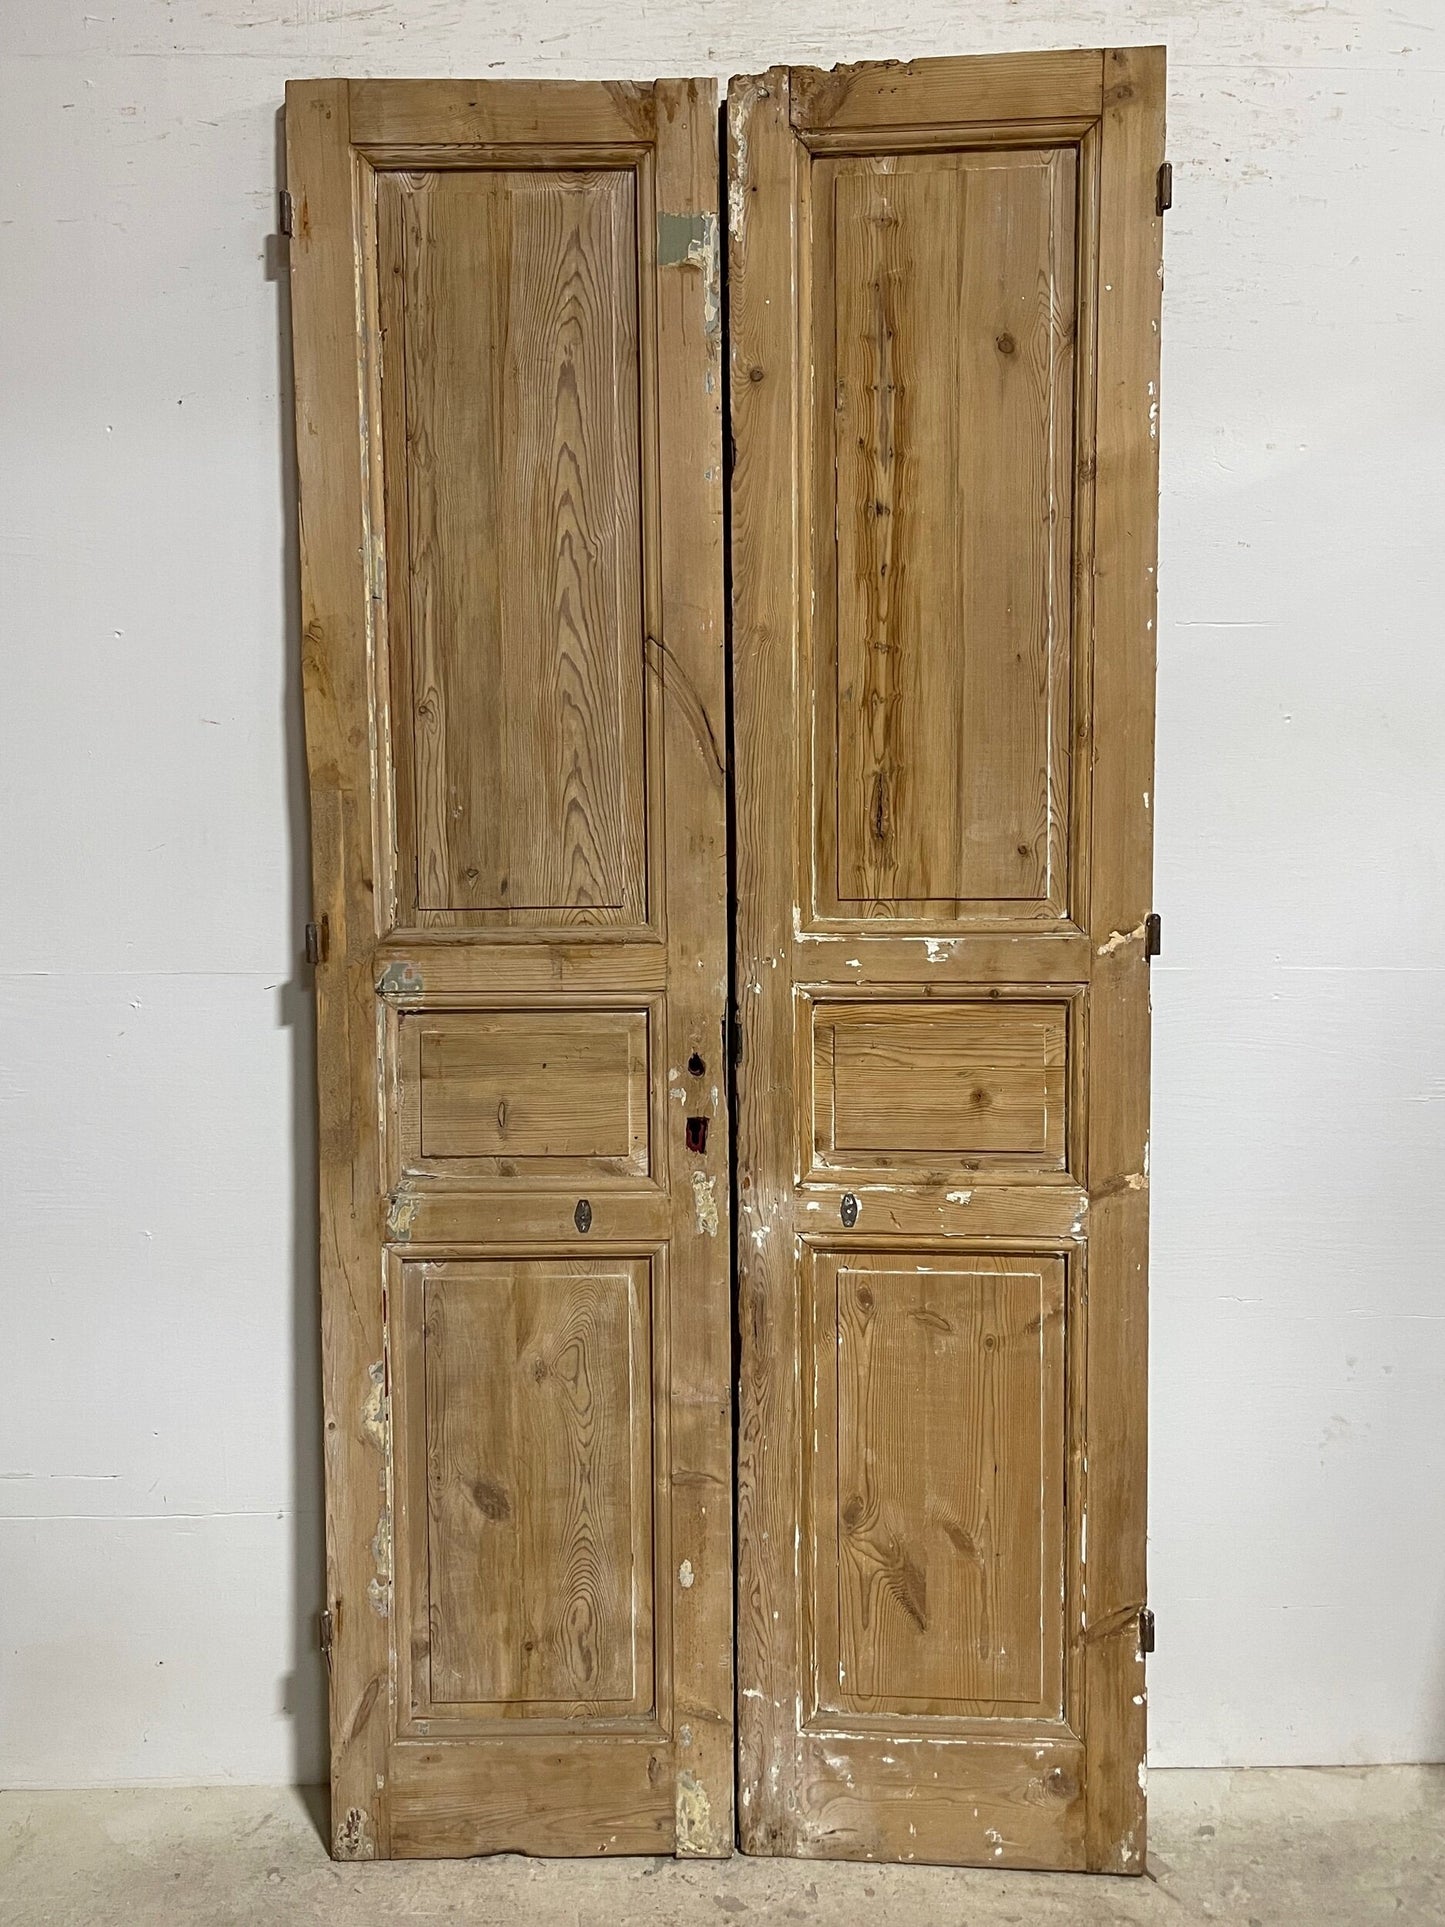 Antique french panel doors (94 x 44) I095